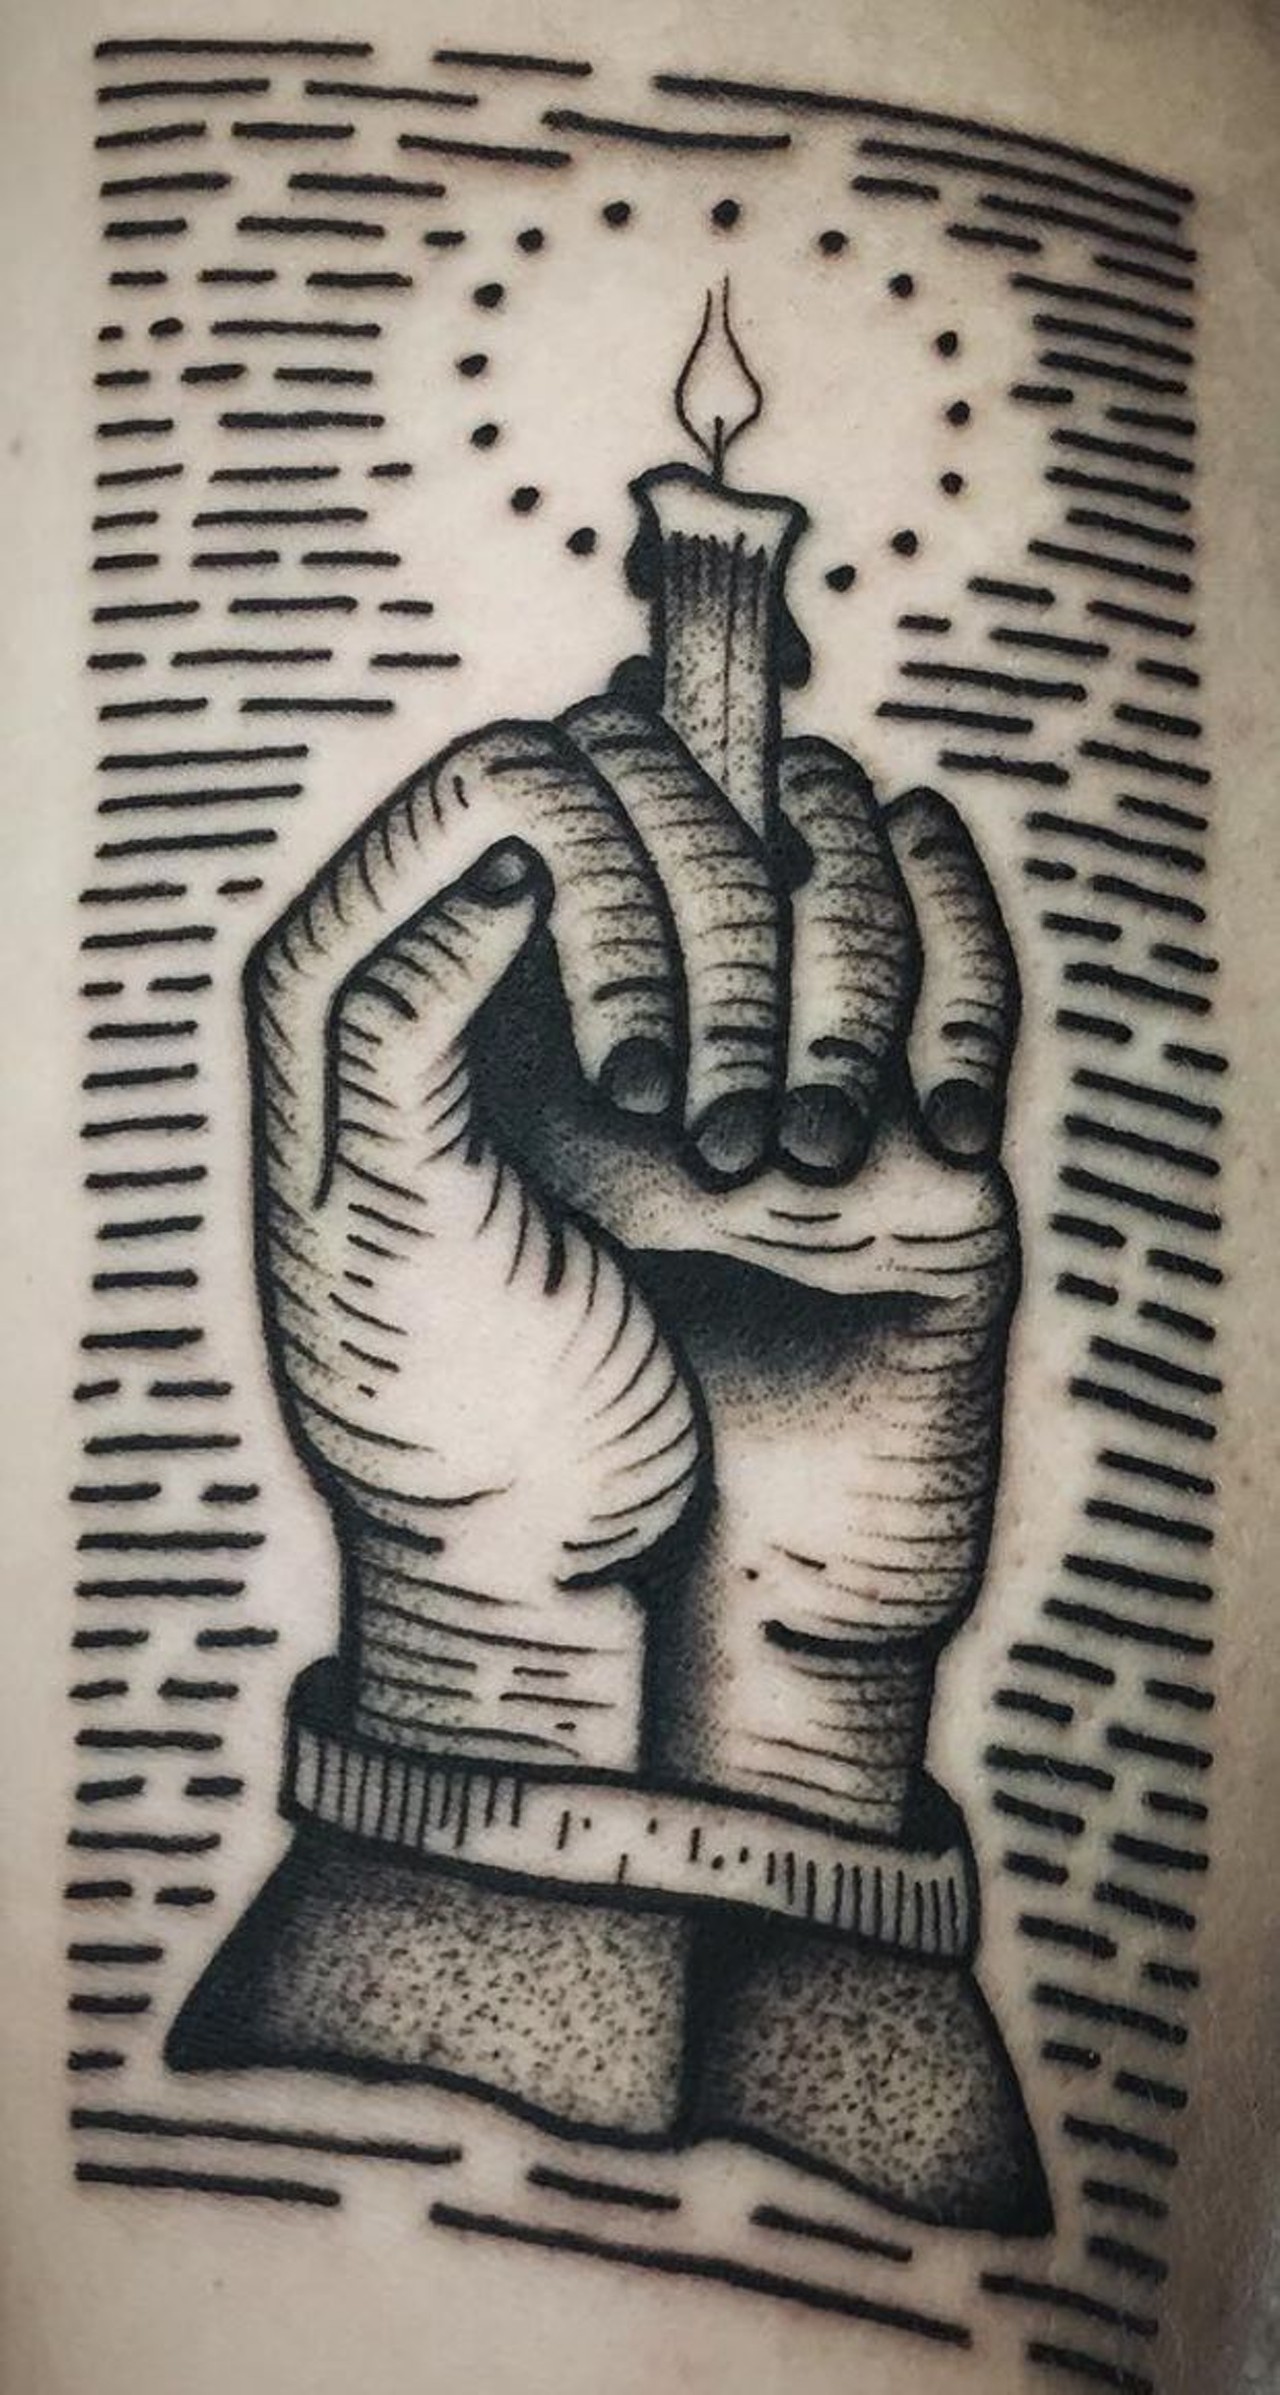  Nate Kemr @nkemr
Find the artist at West Anchor Tattoo.